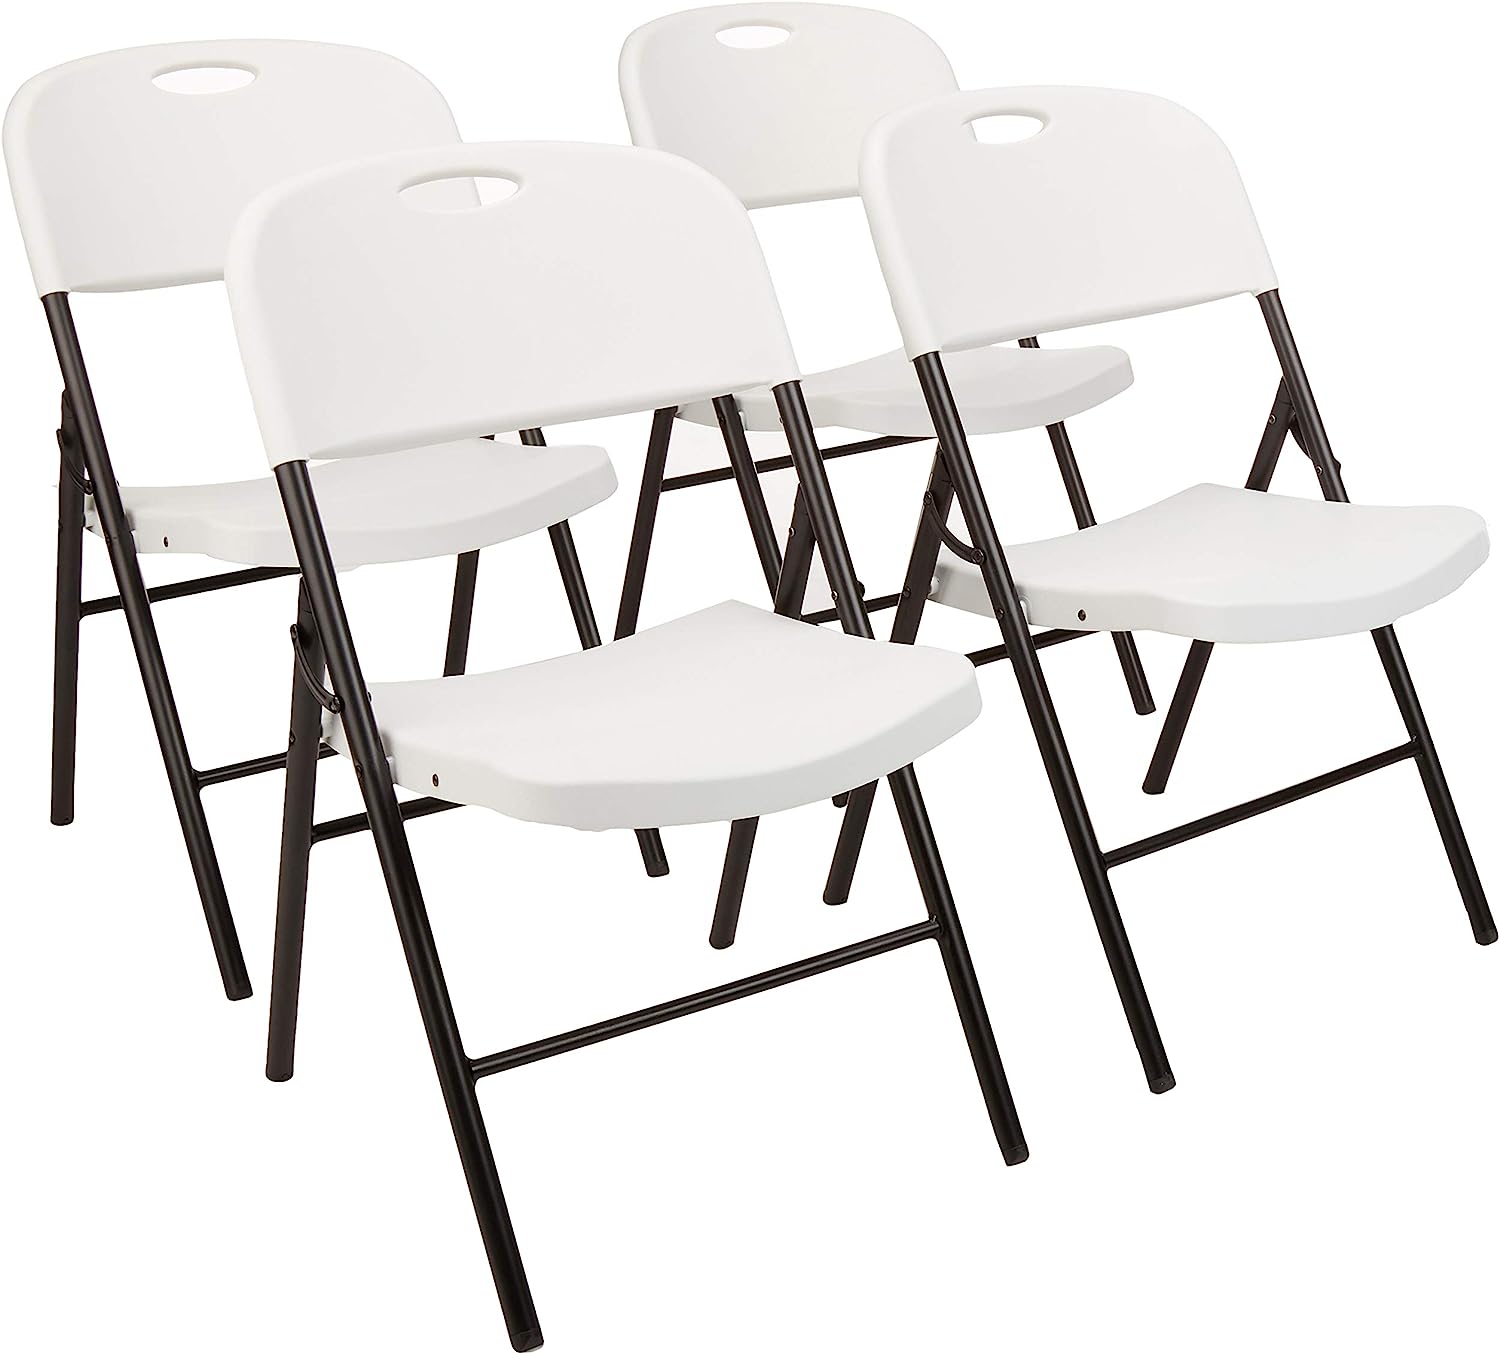 Amazon Basics Folding Plastic Chair, 350-Pound [...]